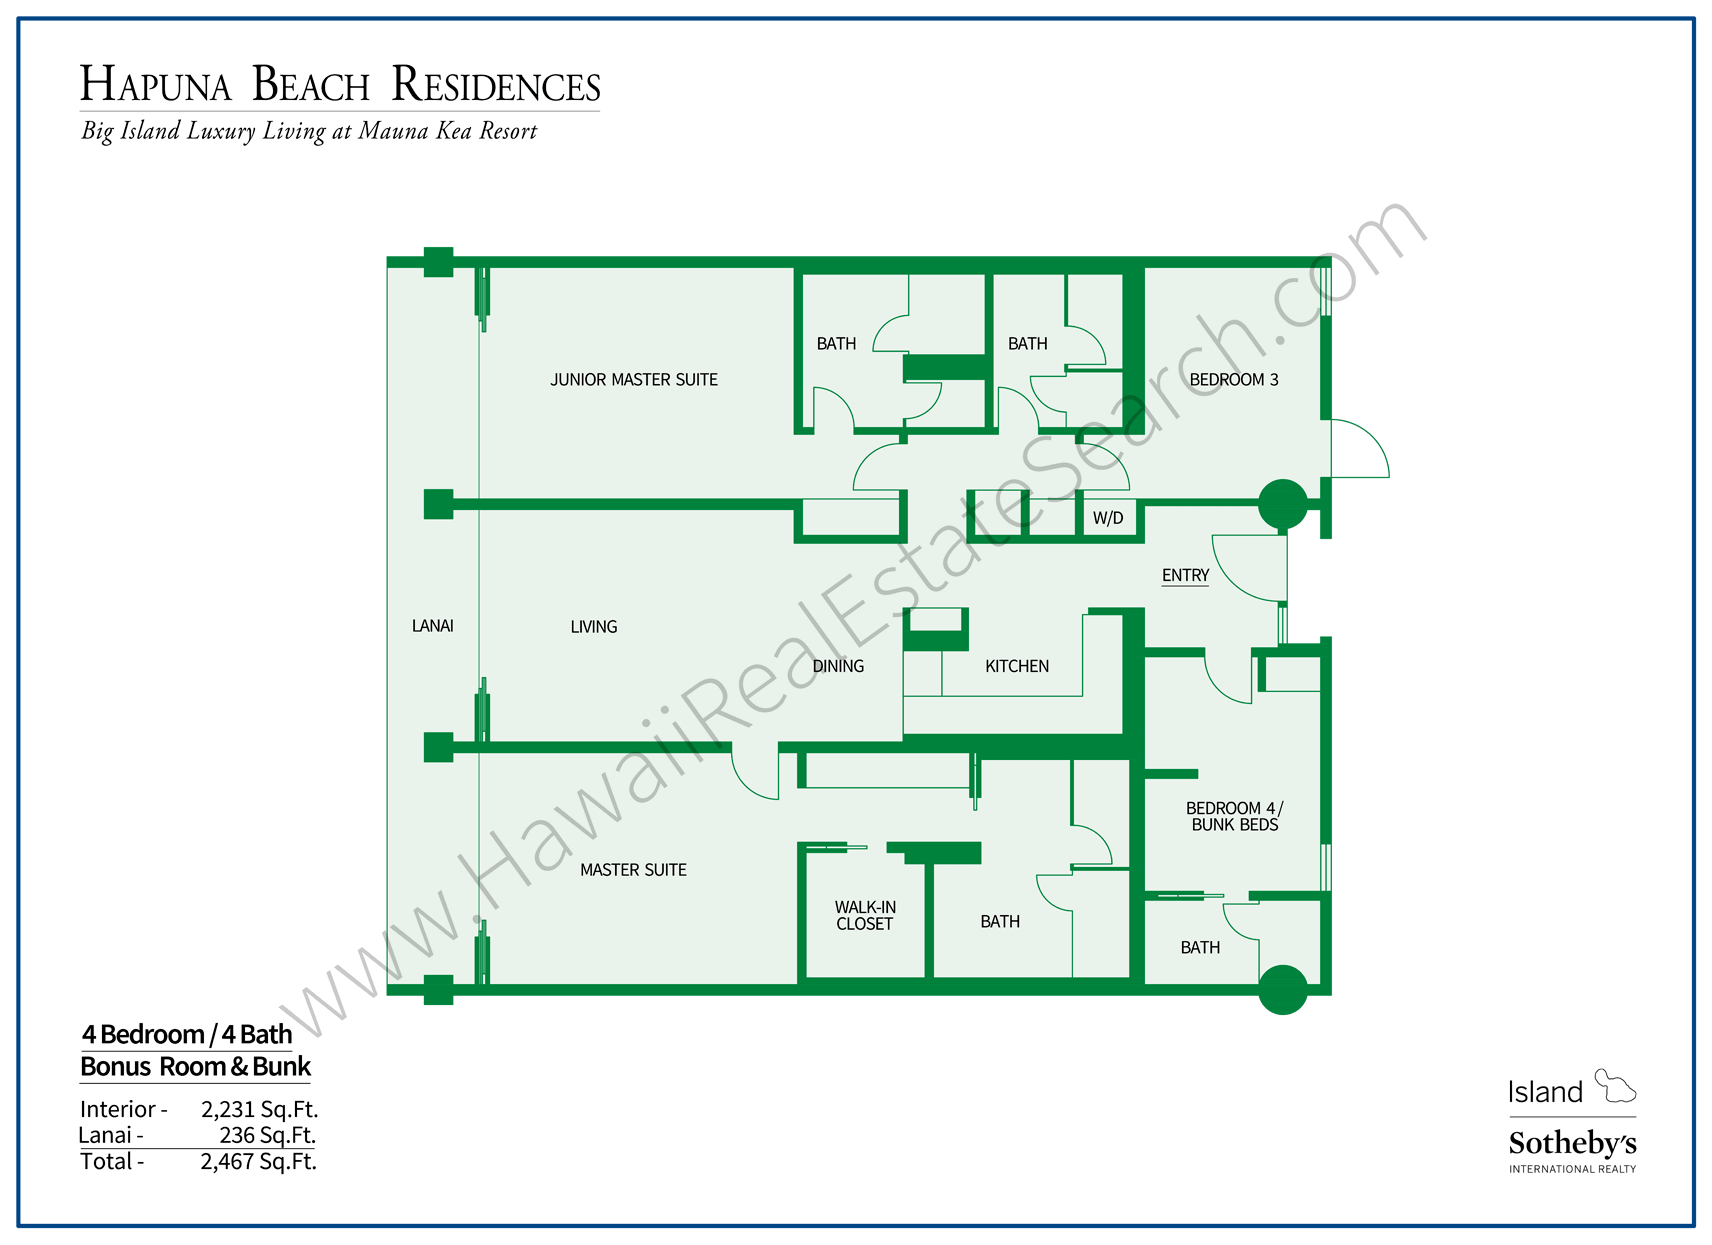 4 bedroom hapuna beach residence floorplan